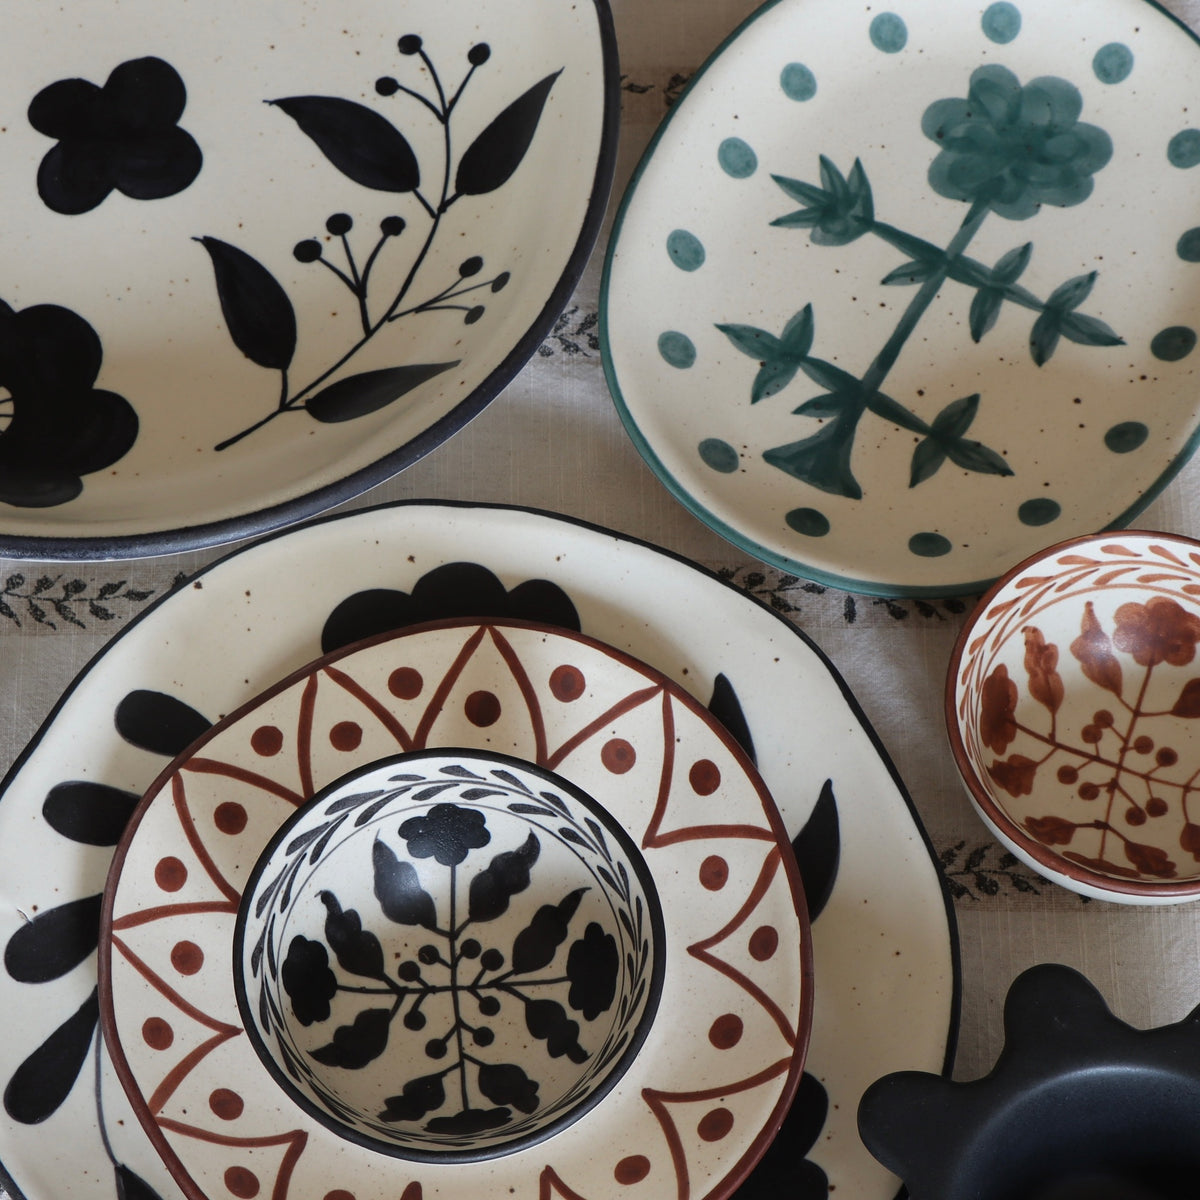 Black Hollyhock Hand-Painted Stoneware Serving Bowl - Holistic Habitat 